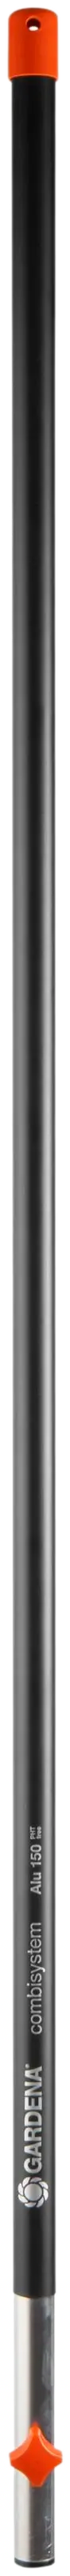 Gardena Combisystem-alumiinivarsi 130 cm, suora